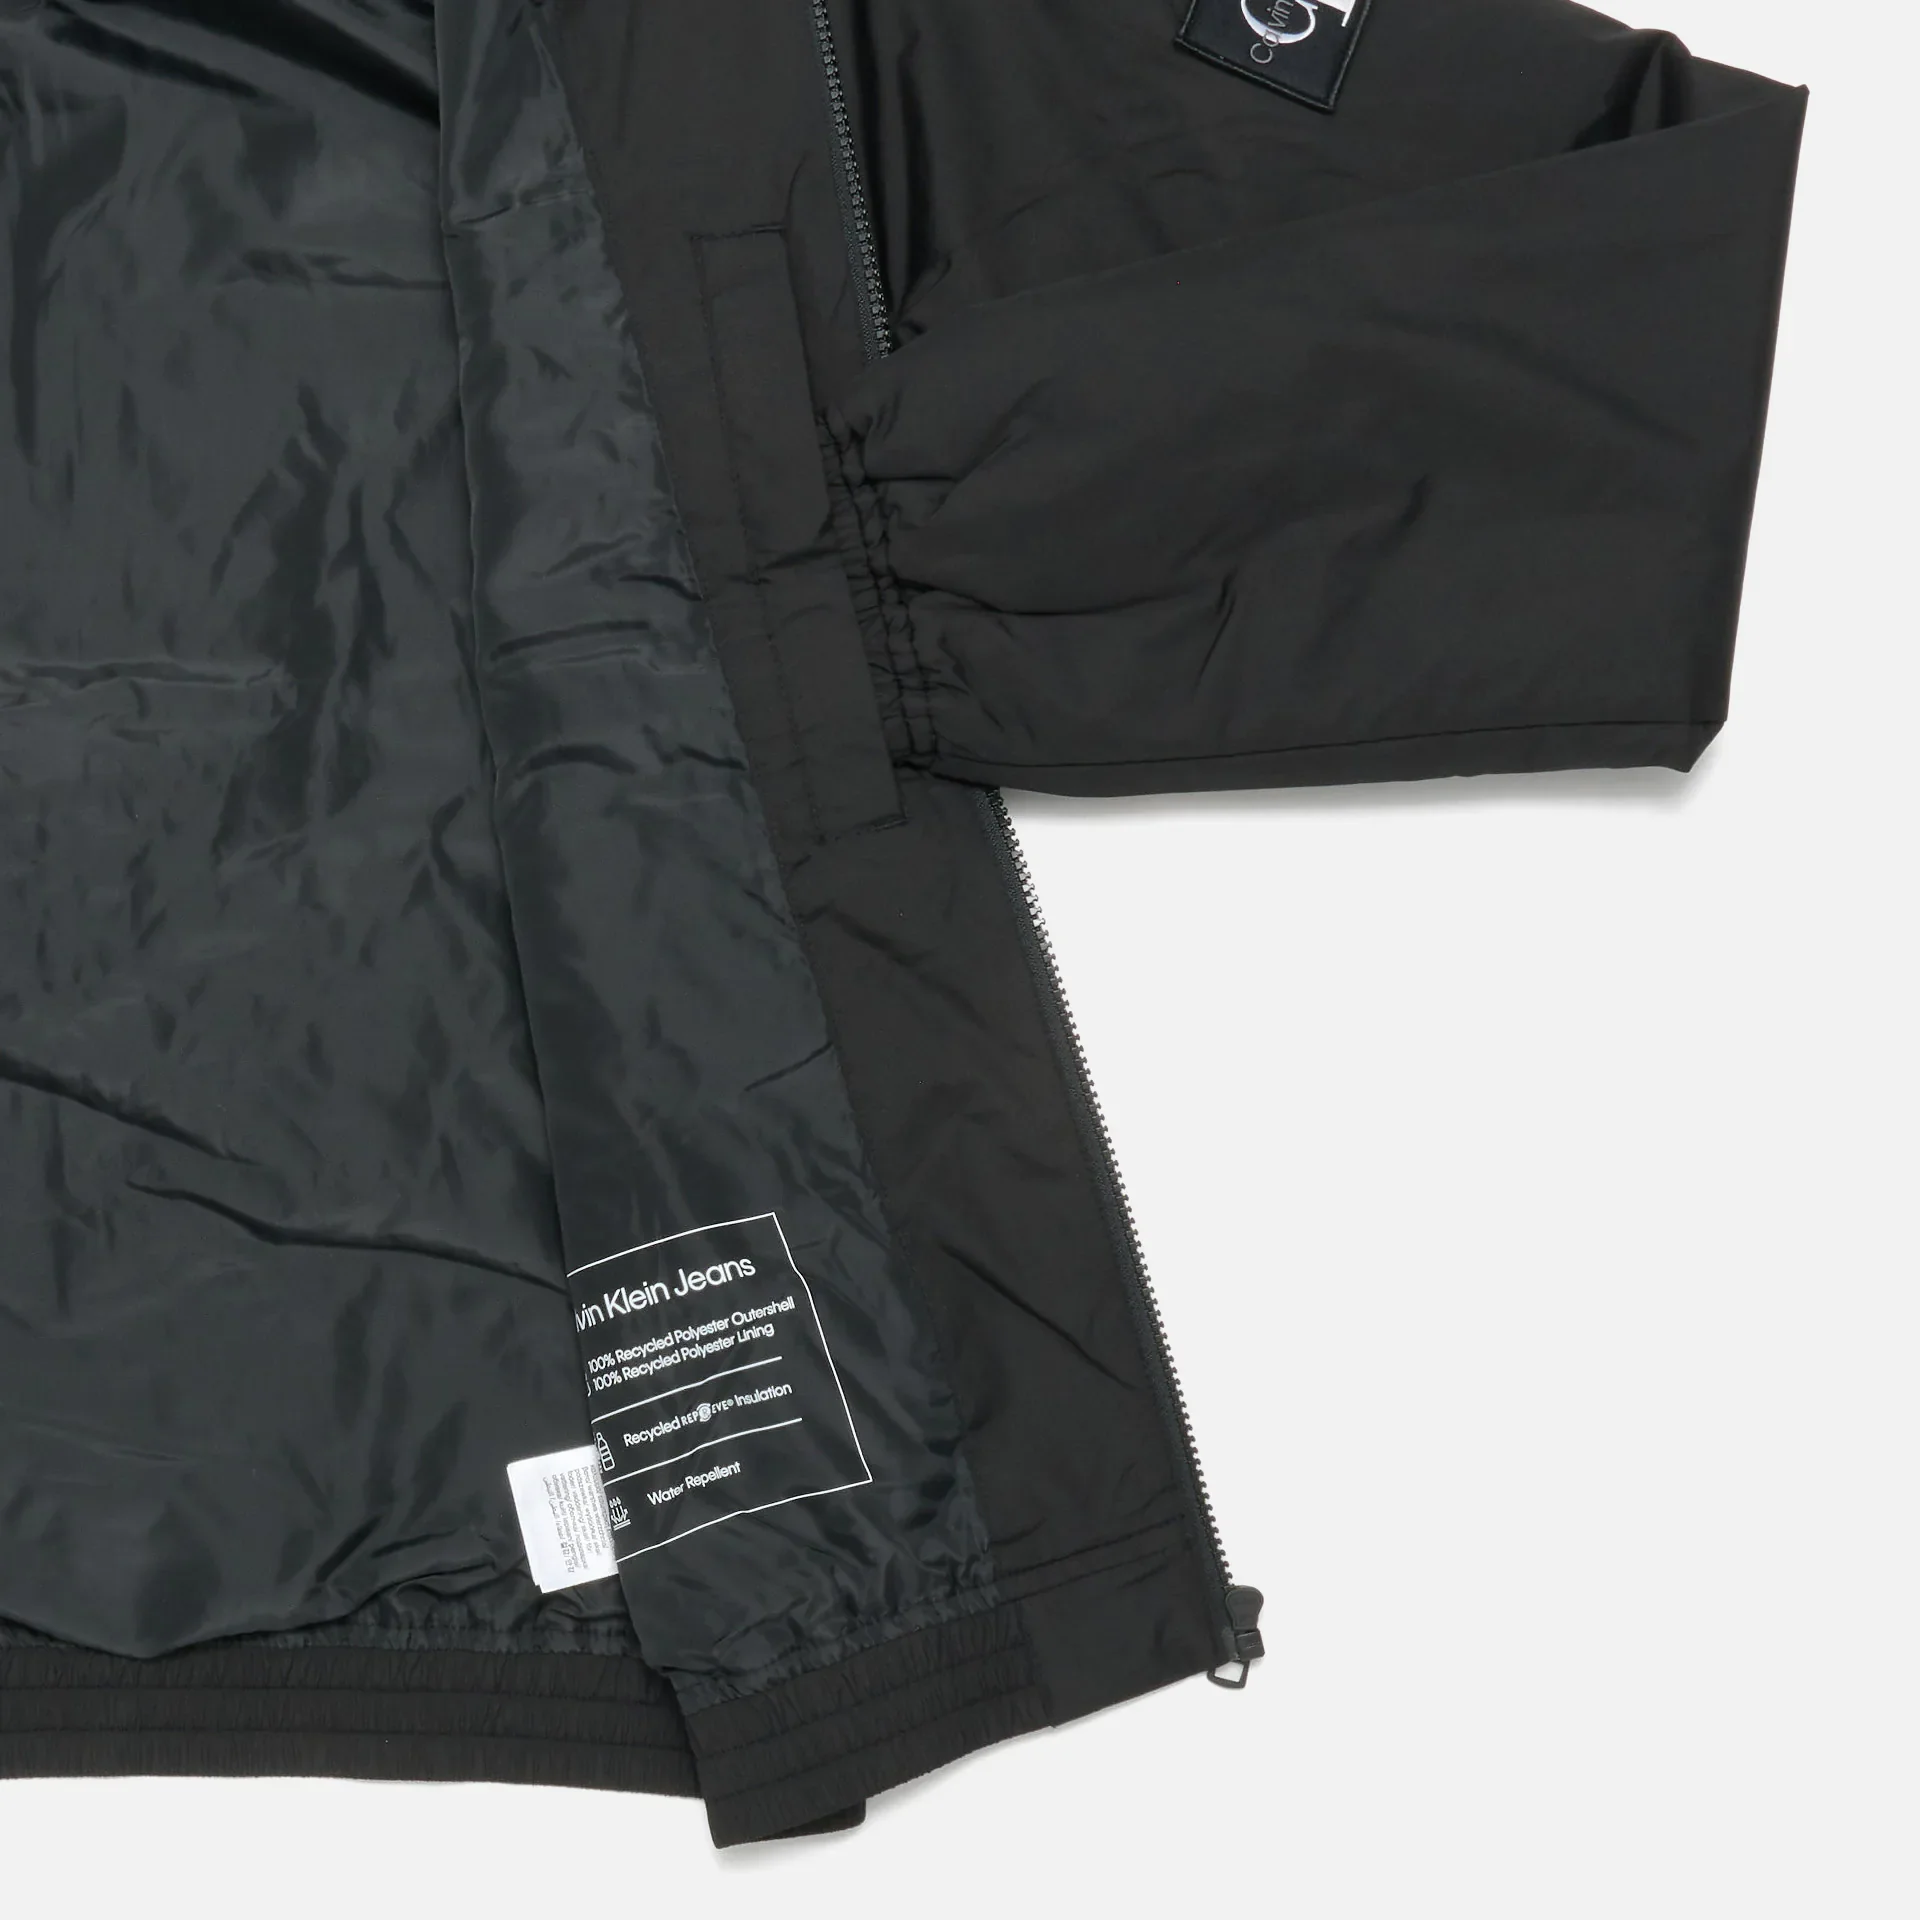 Calvin Klein Jeans Padded Harrington Jacket Black